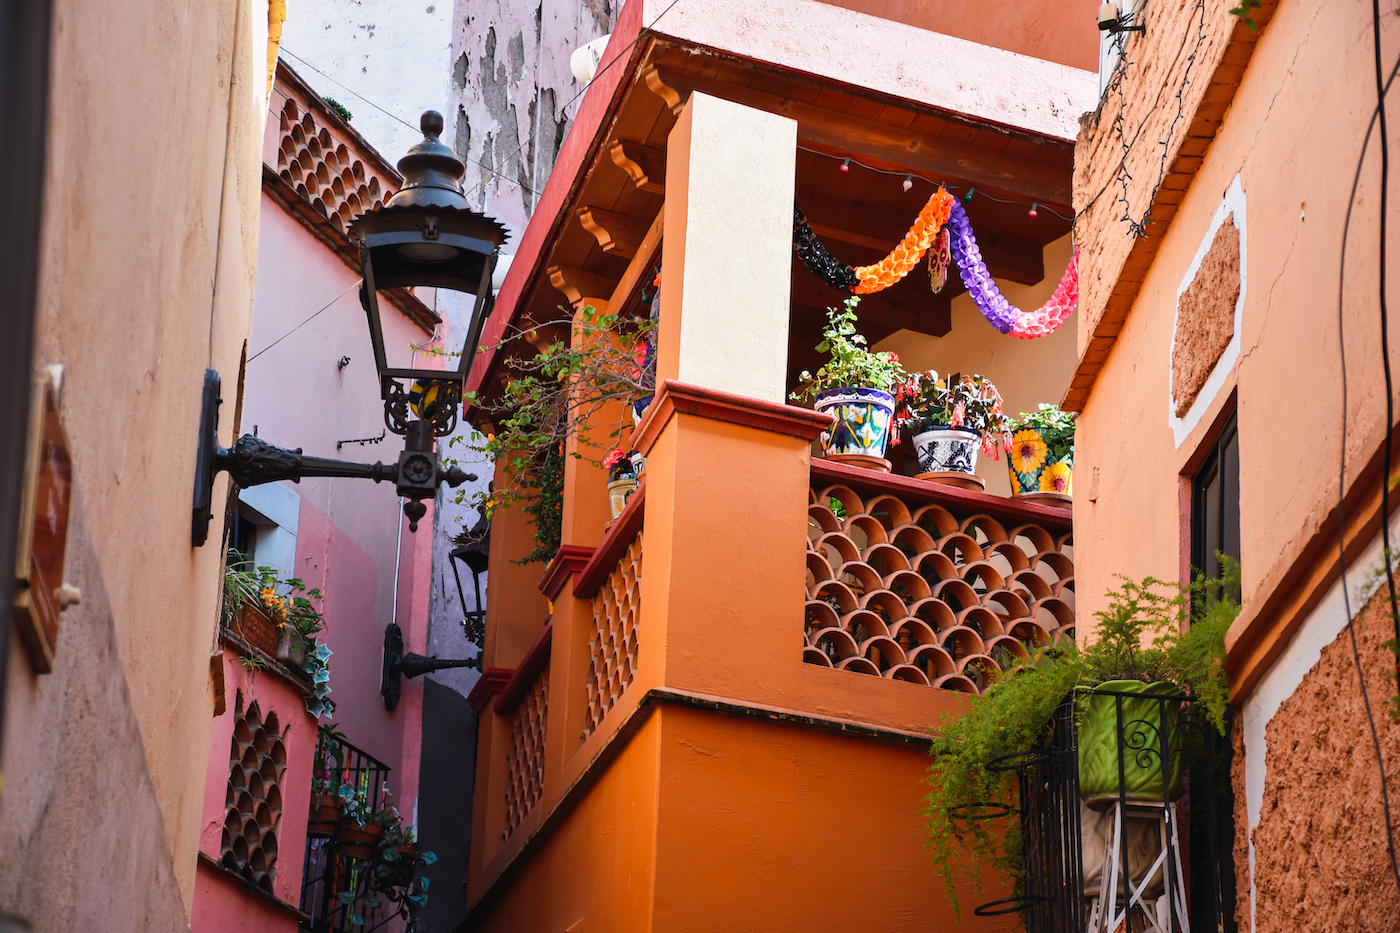 Balkon bij Callejon del beso guanajuato mexico romeo en julia